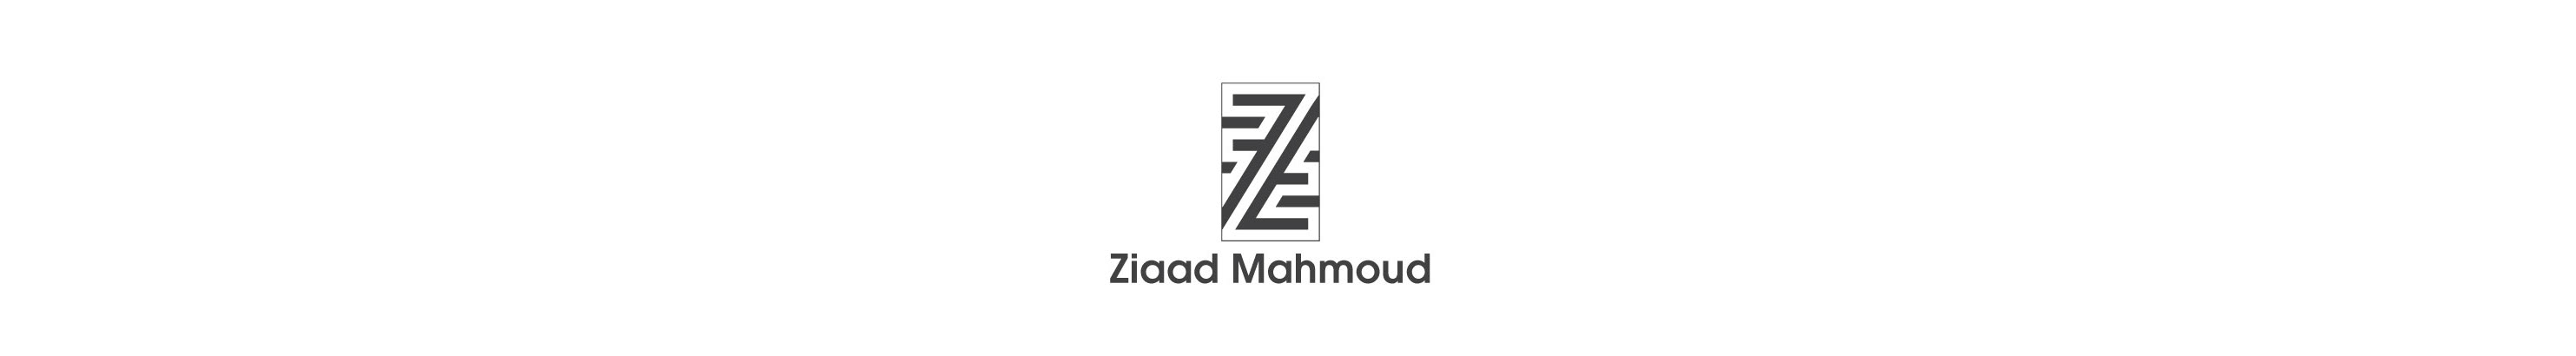 Ziaad Mahmoud profil başlığı